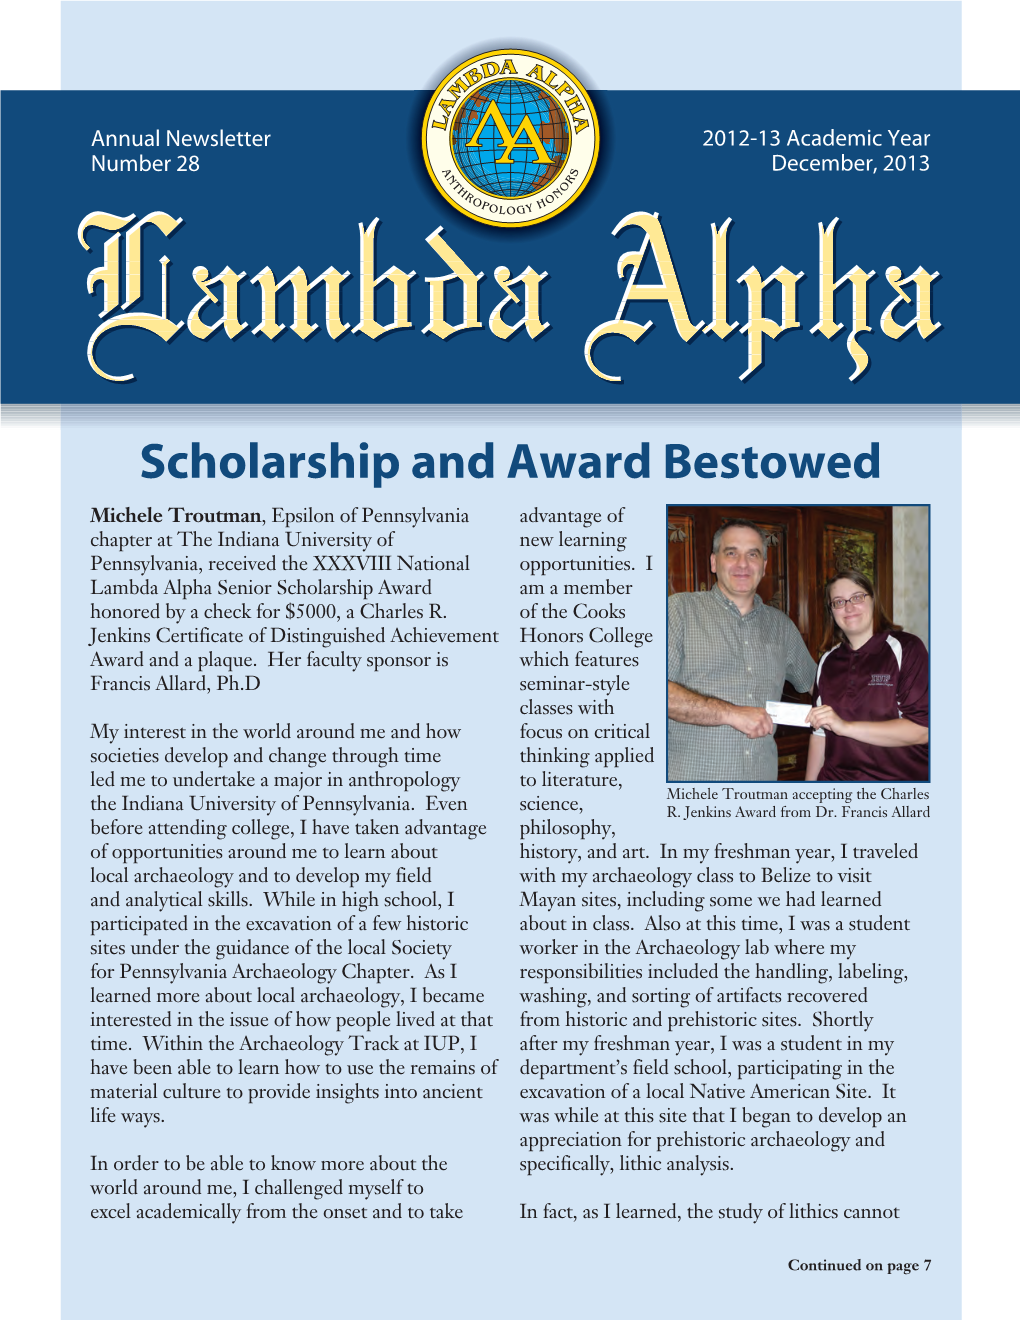 Scholarship and Award Bestowed